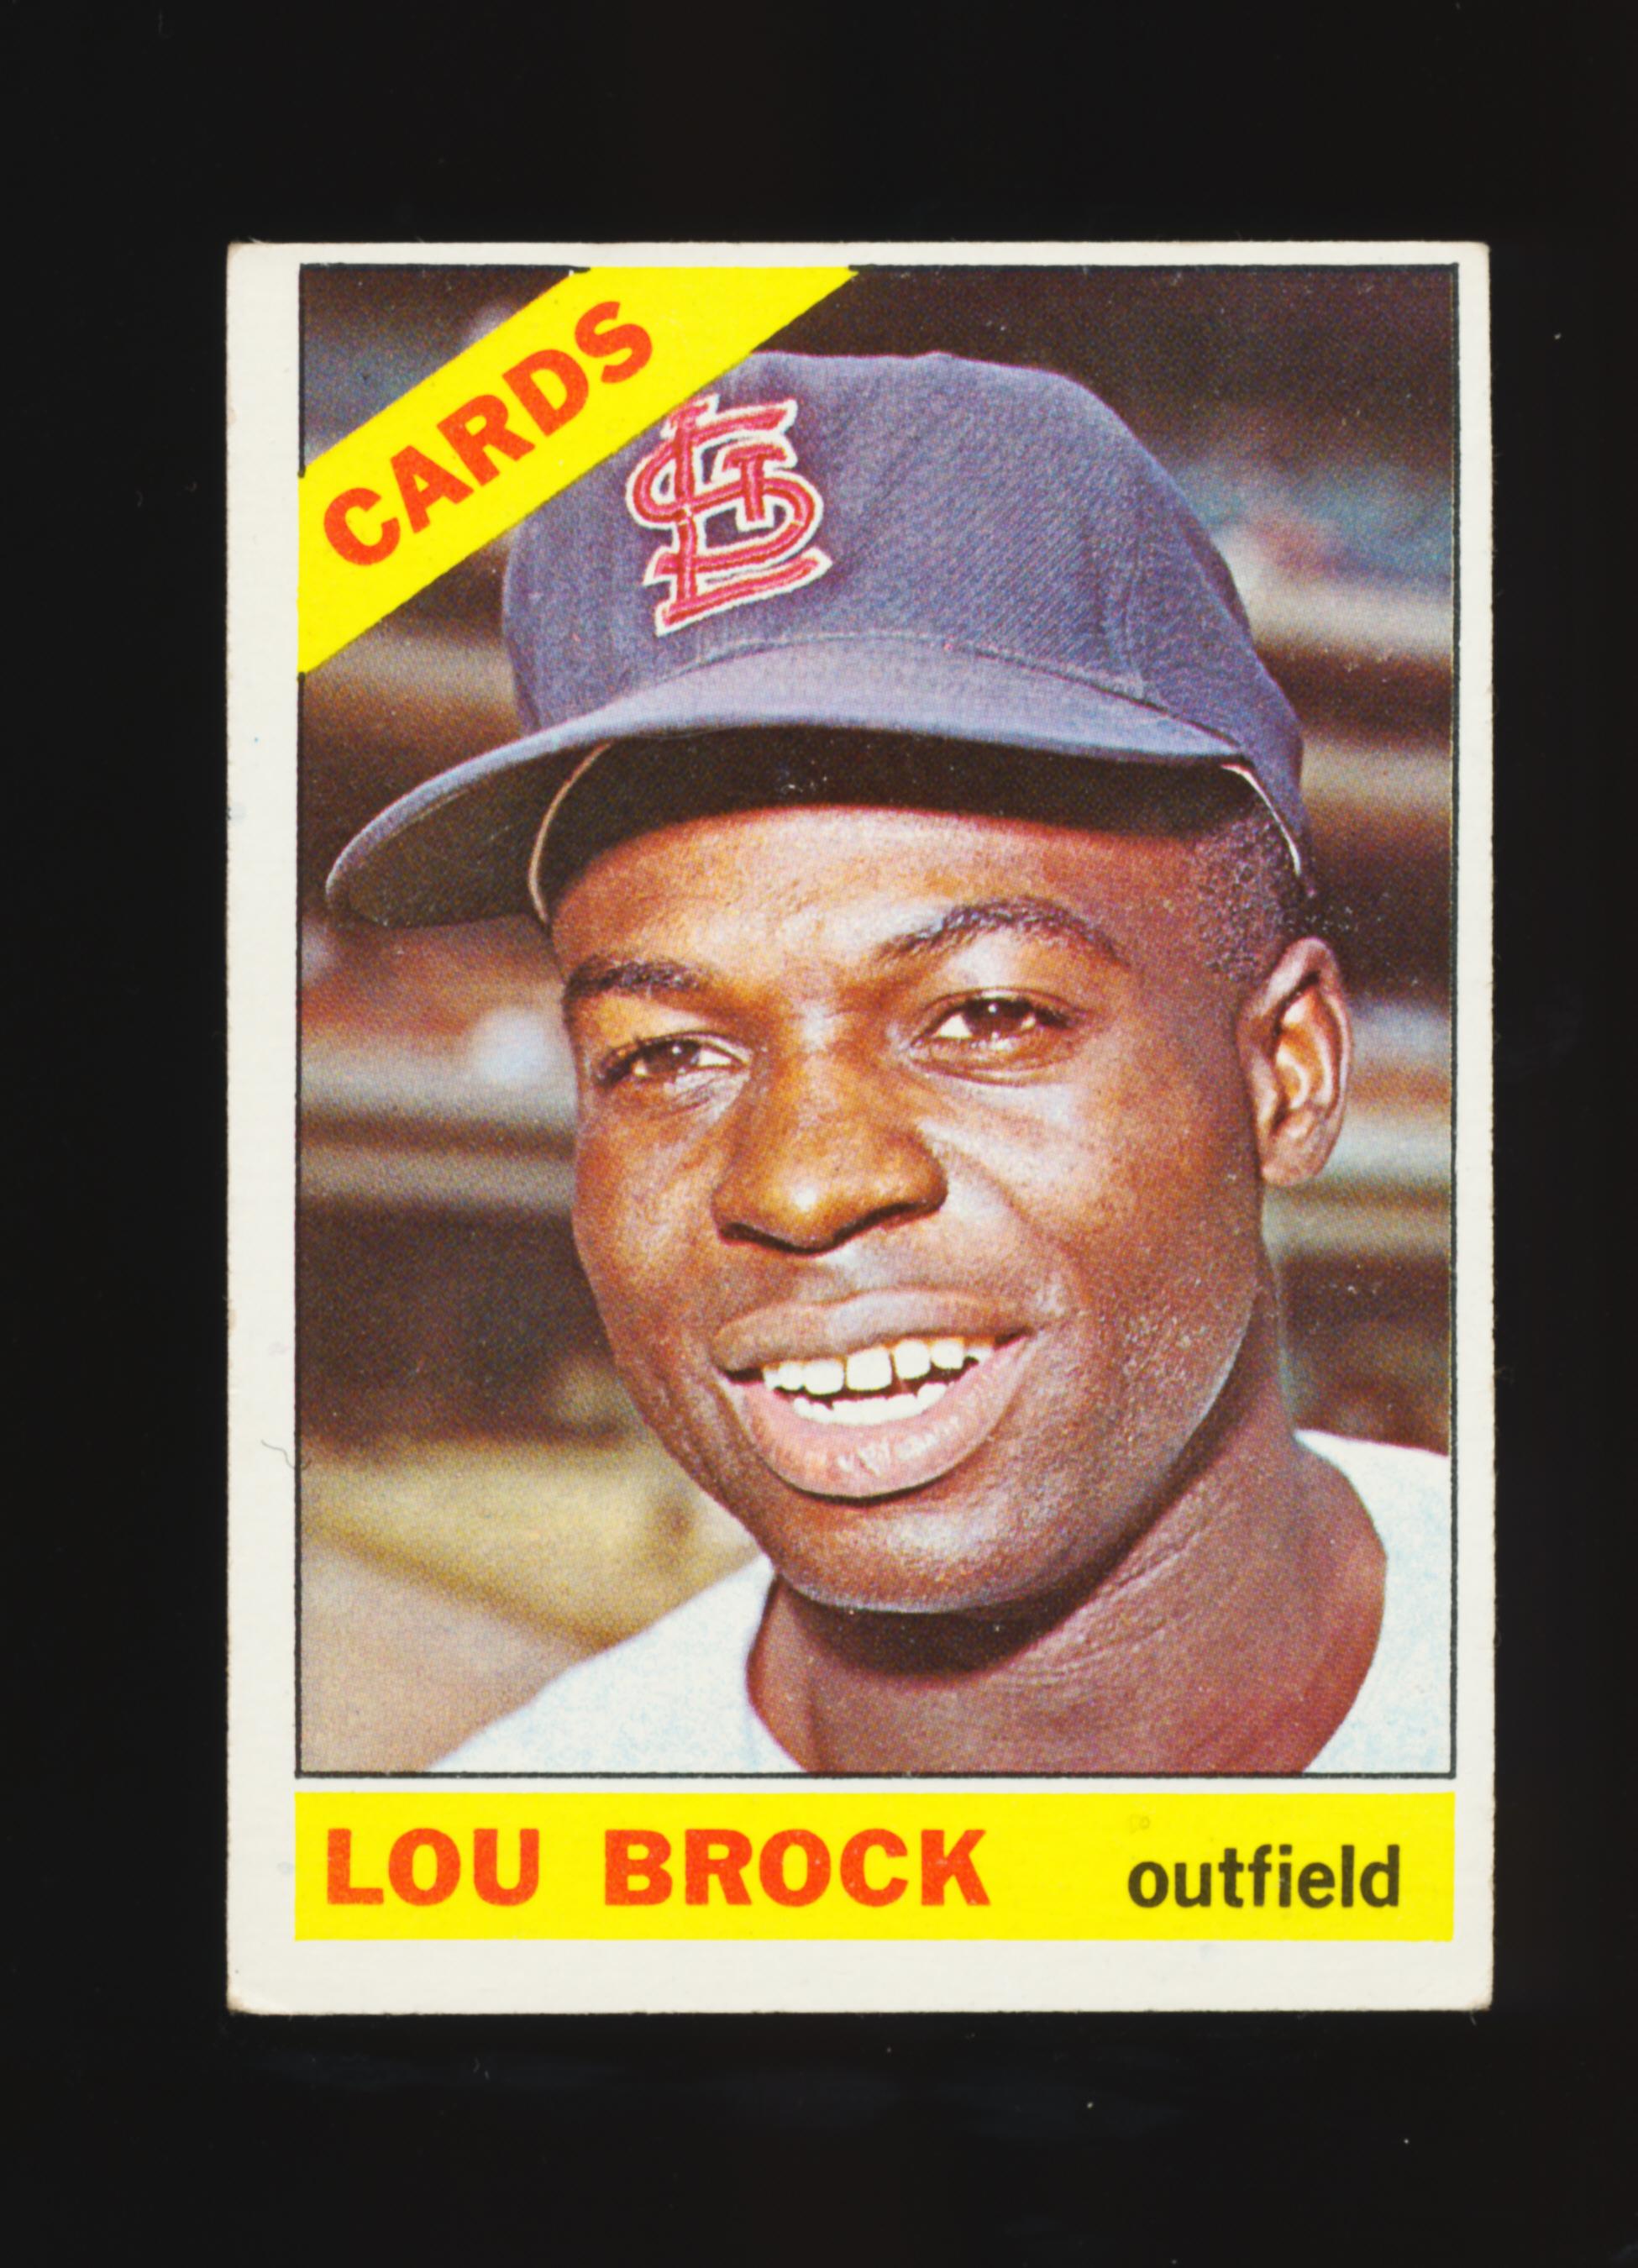 1966 Topps Baseball Card #125 Hall of Famer Lou Brock St Louis Cardinals